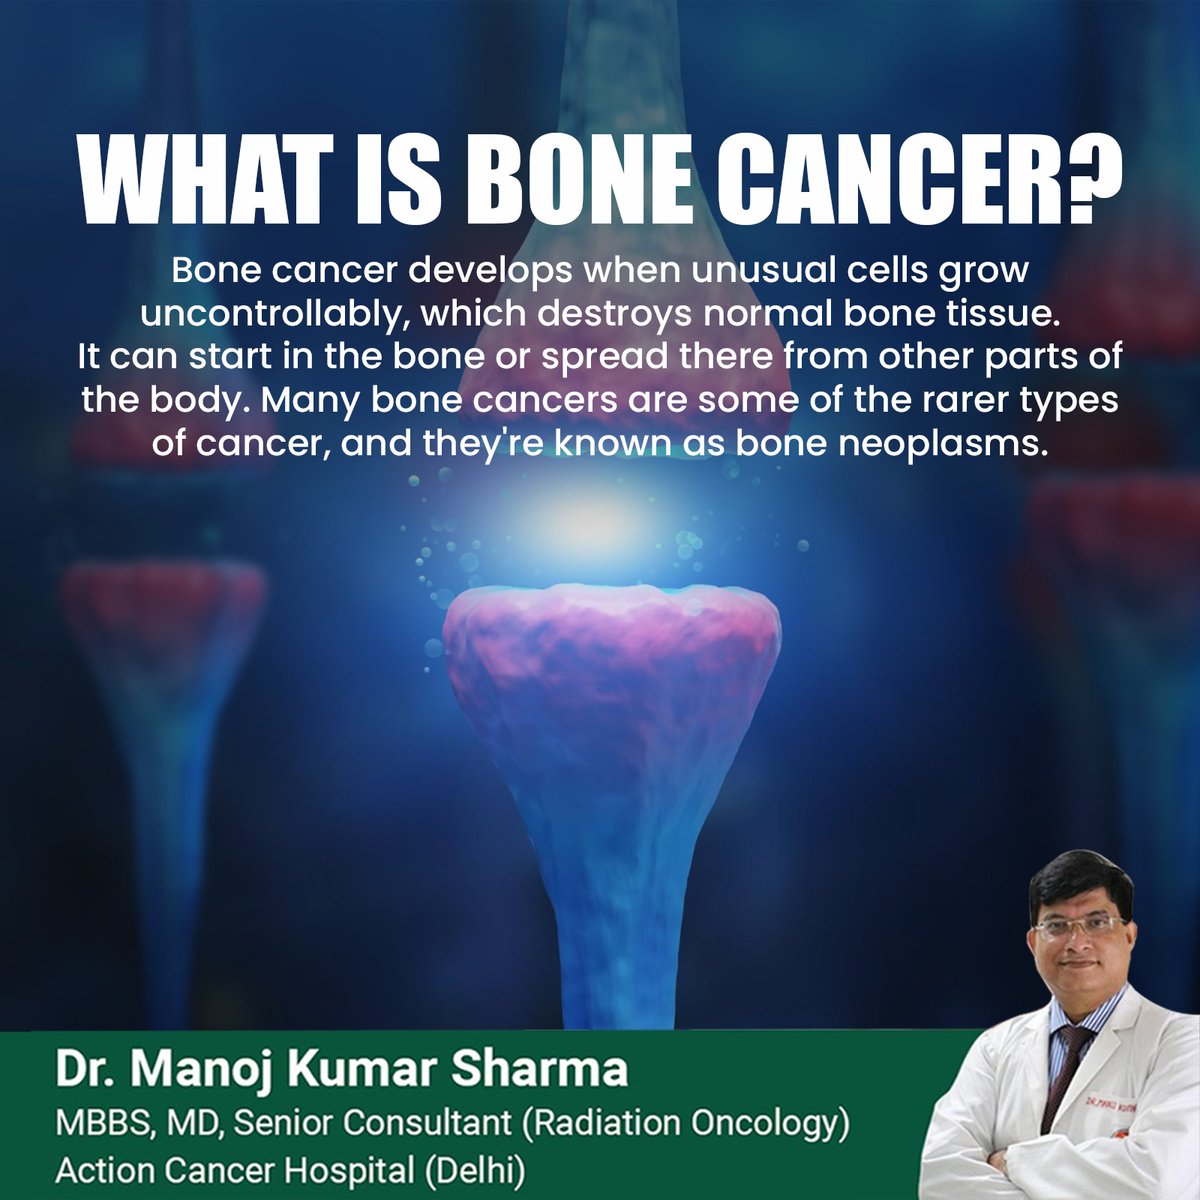 Bone cancer refers to cancer that originates in the bones.

.

.

.

#drmanojkumarsharma #drmanoj #oncologist #oncology #bonecancer #cancercheckup #cancerscreening #cancercure #cancertreatment #cancersurvivor #cancercare #cancer #cancertreatment #earlycancerdetection